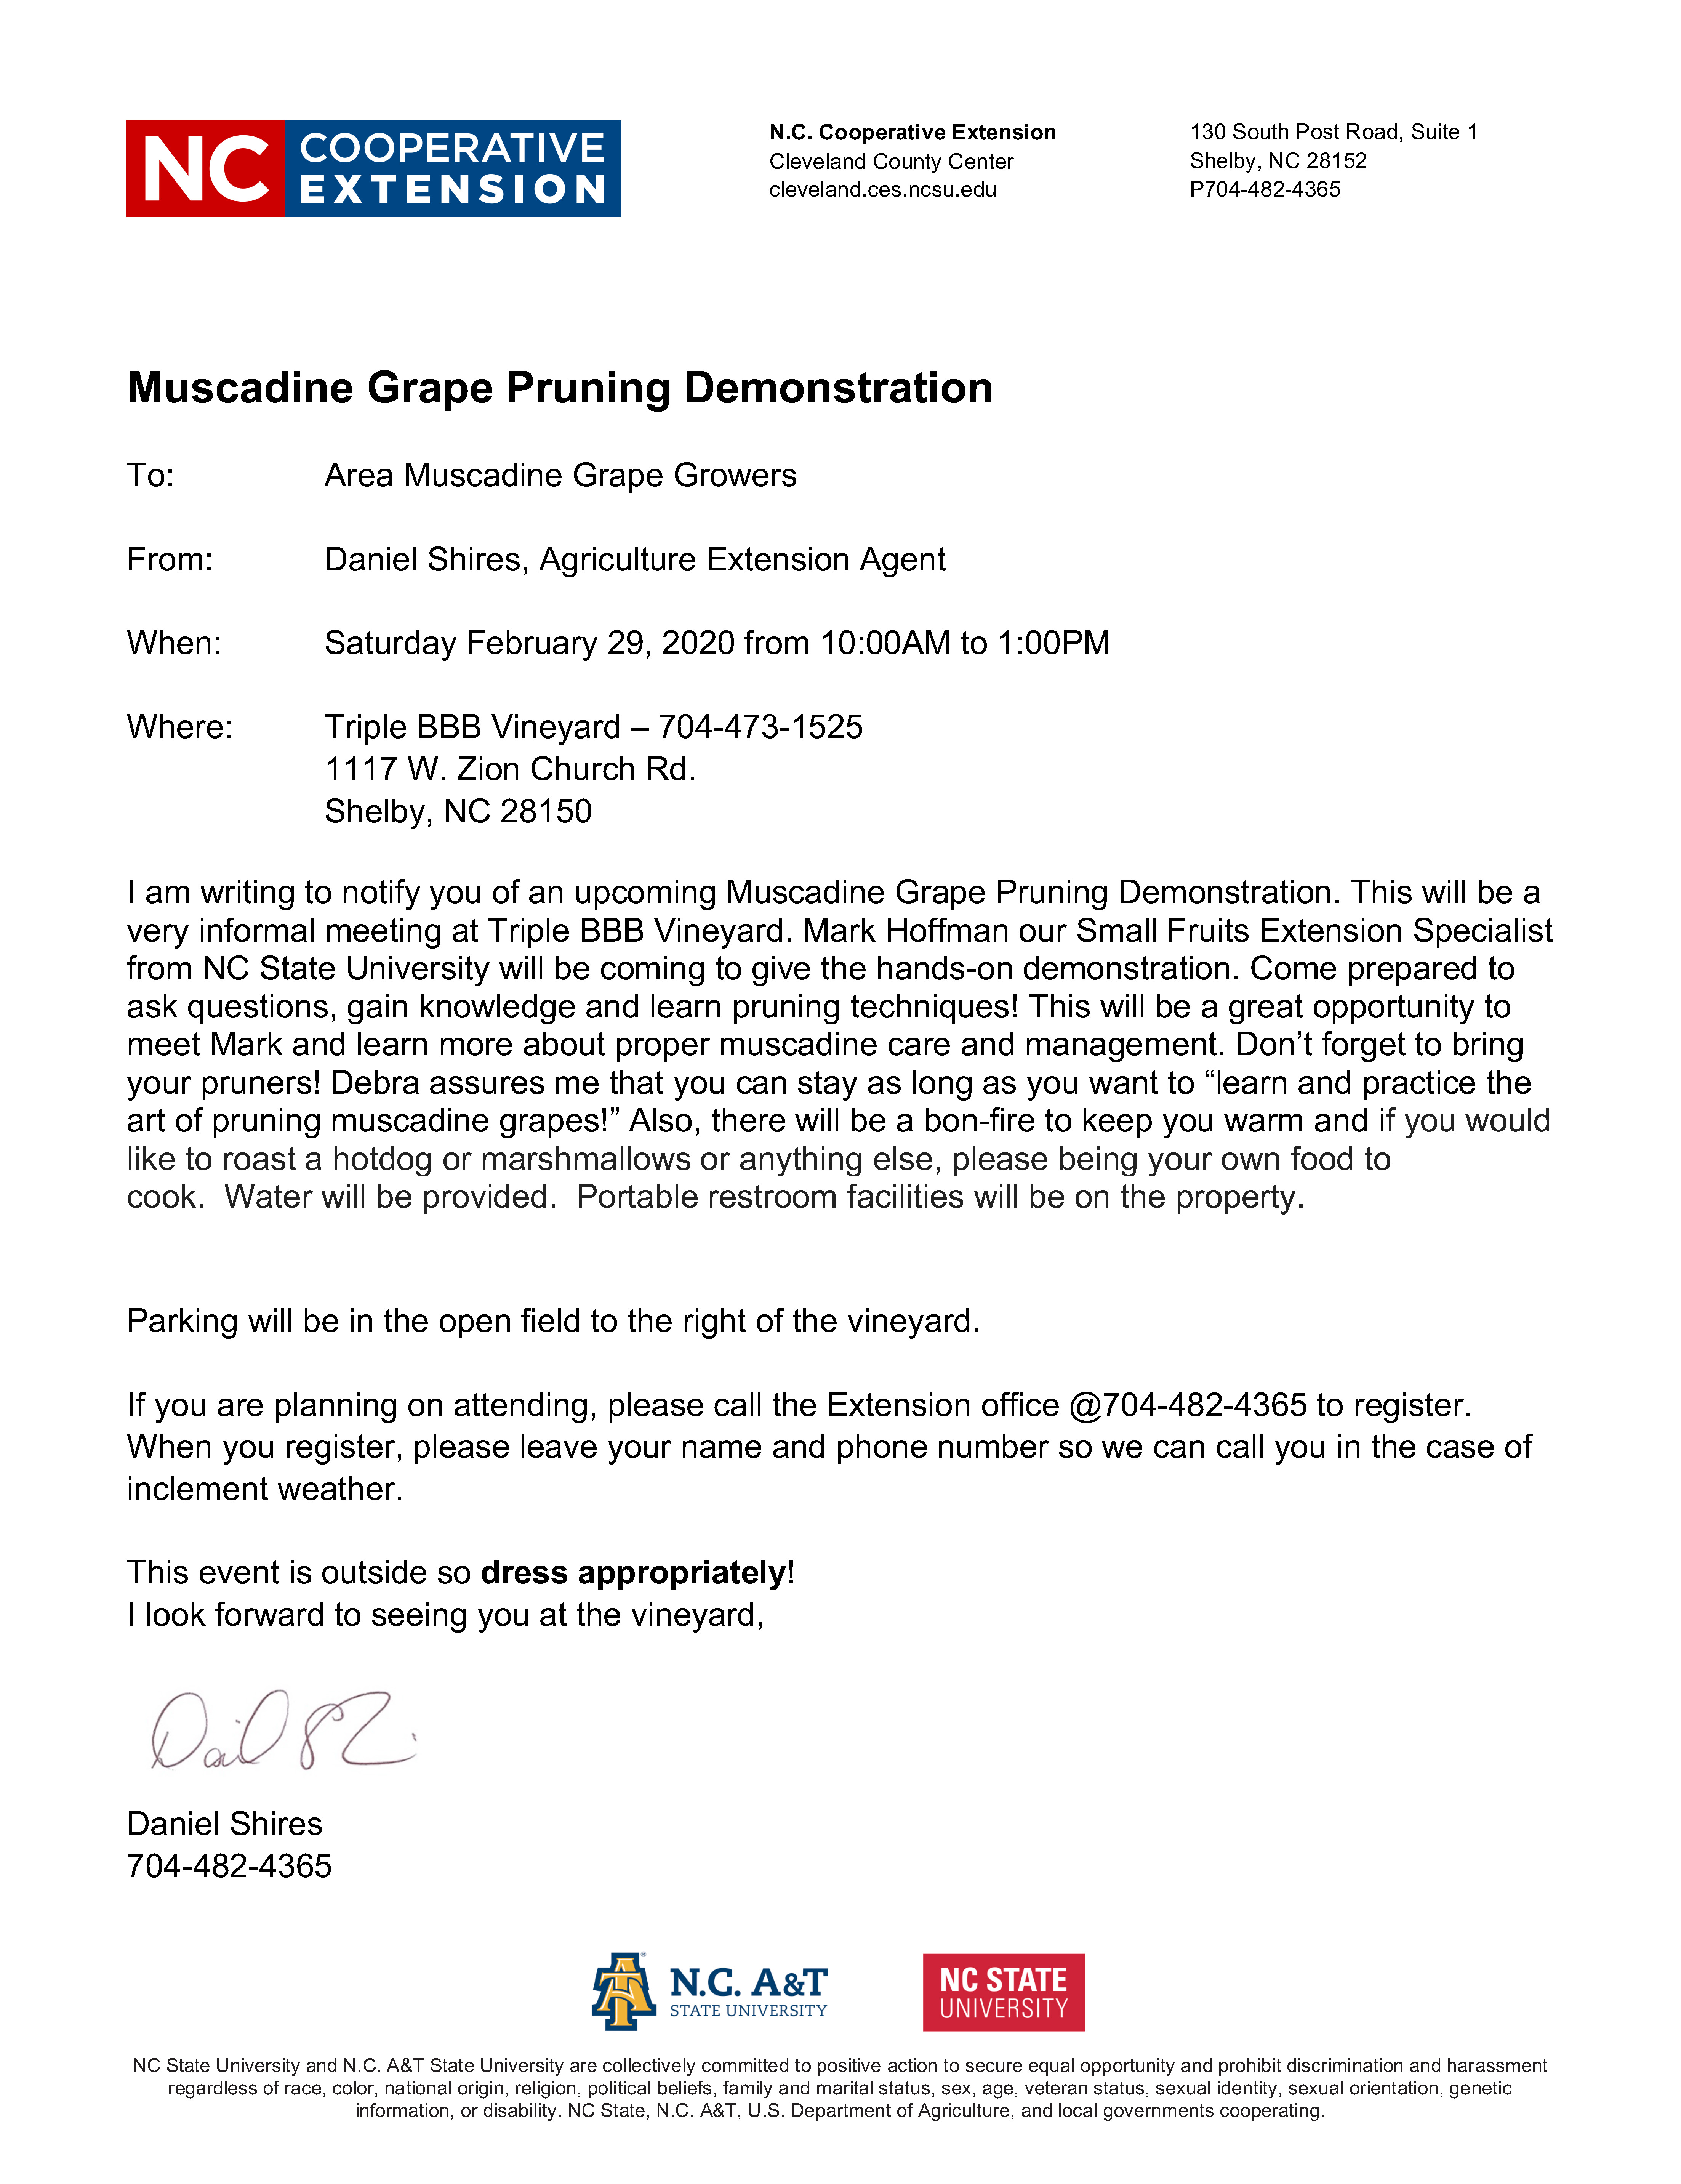 Grape Pruning Invitation